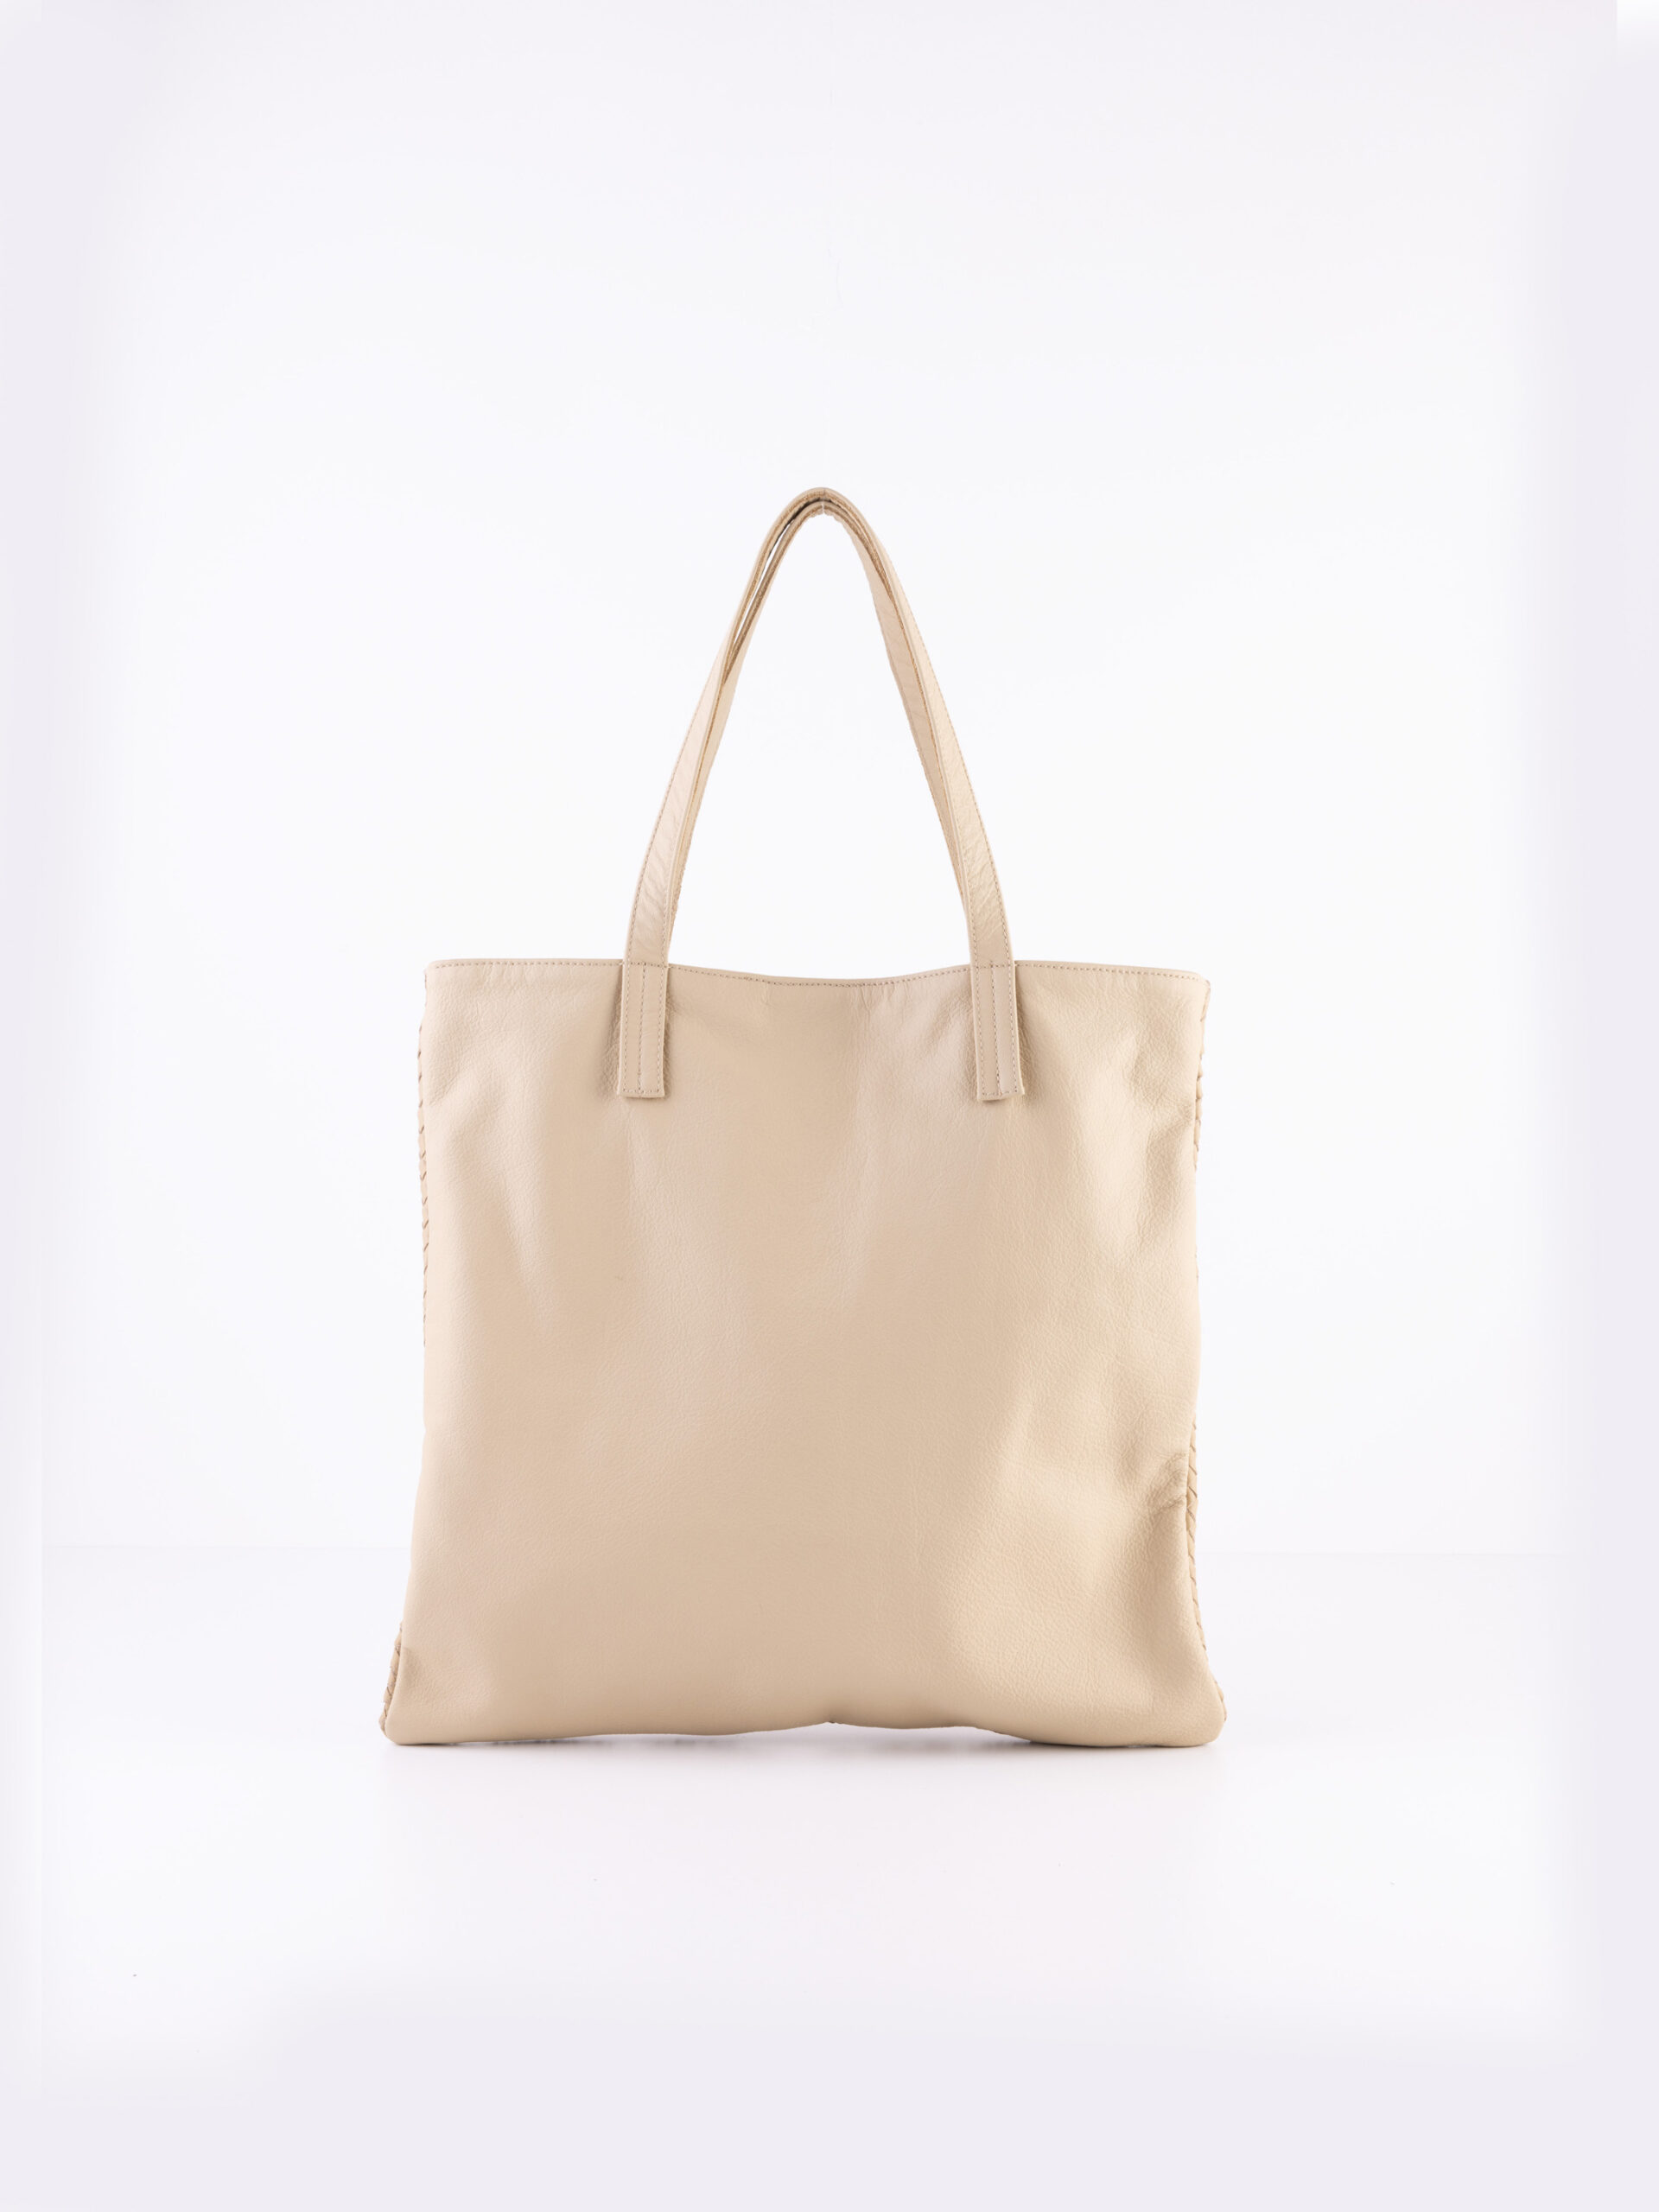 lola-beige-tote-leather-weaved-bag-shiny-mat-handmade-claramonte-matchboxathens